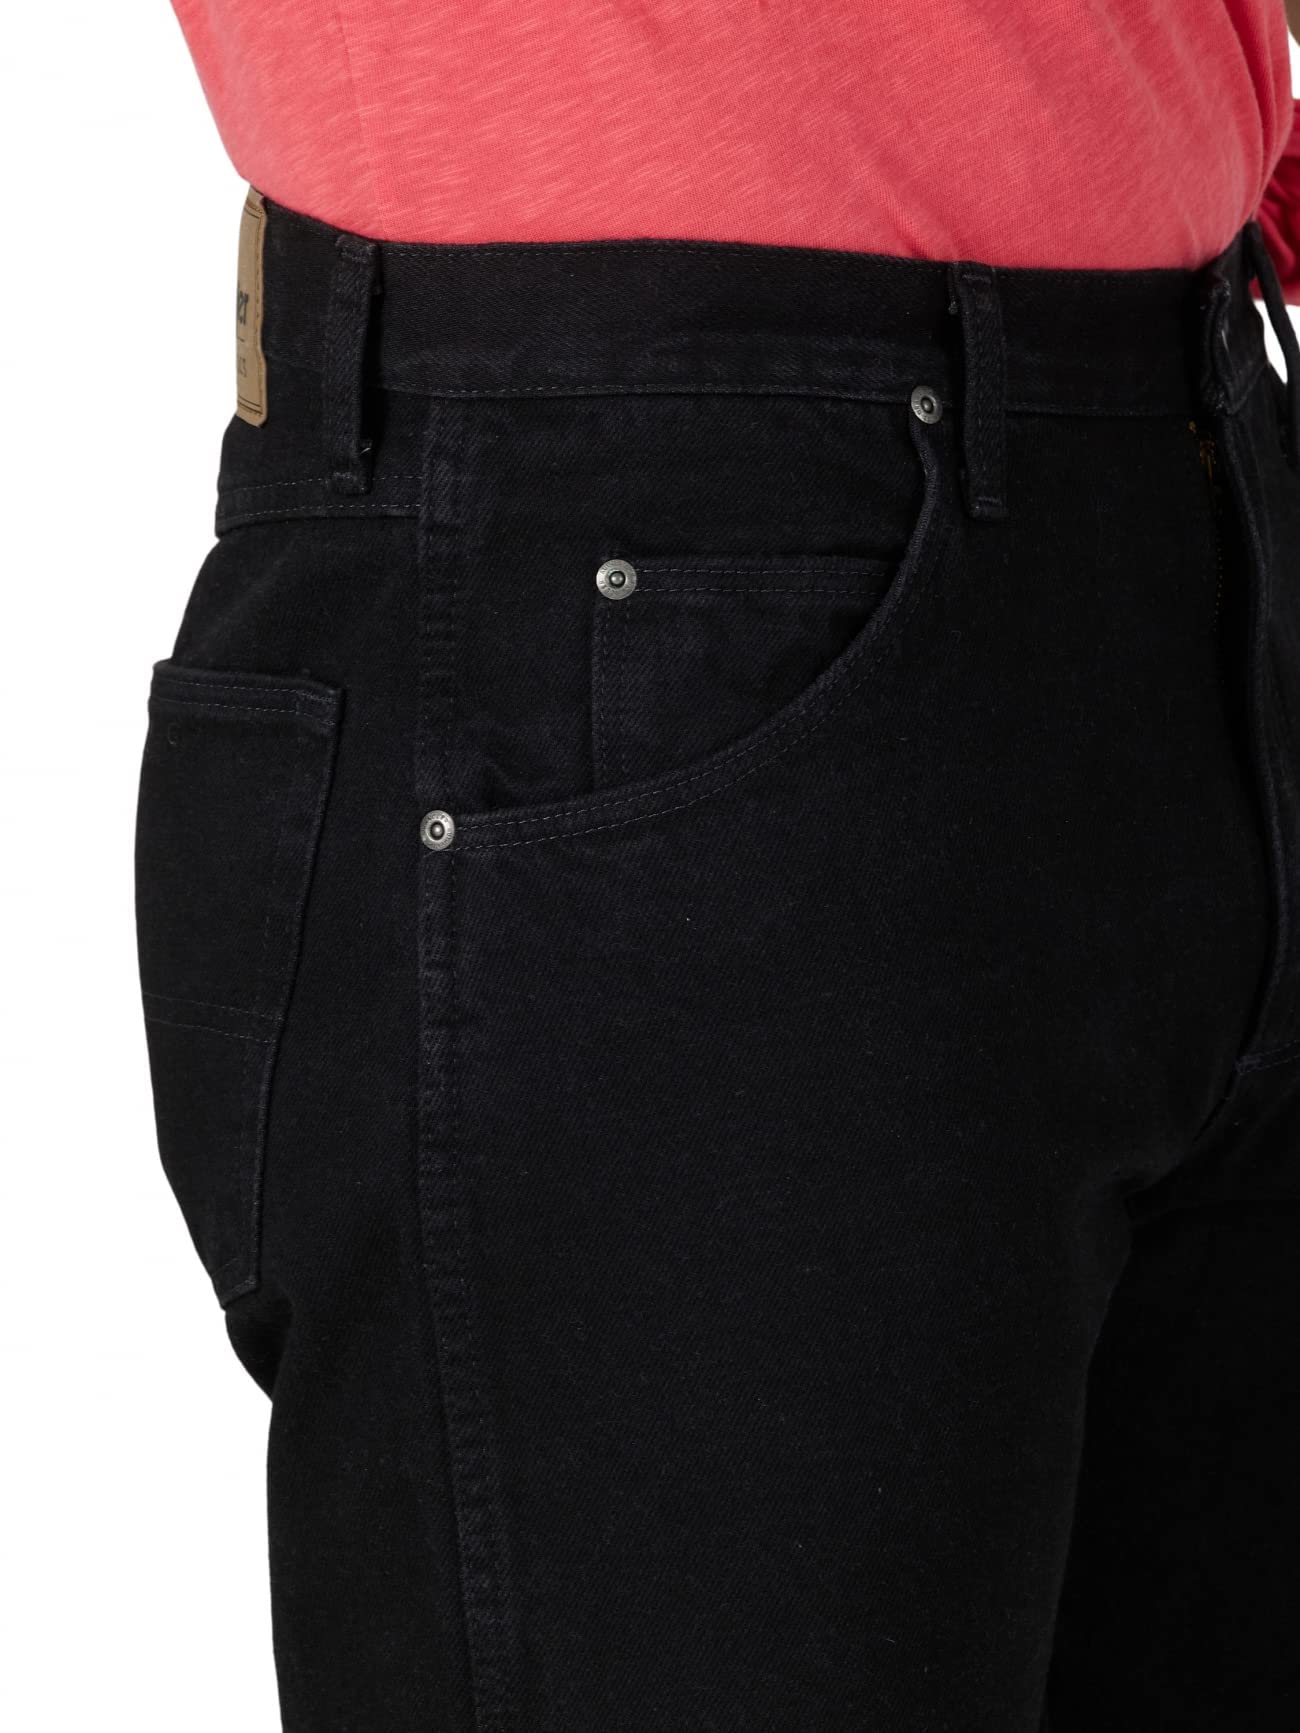 Wrangler Authentics Men's Classic 5-Pocket Regular Fit Cotton Jean, Black, 30W x 30L